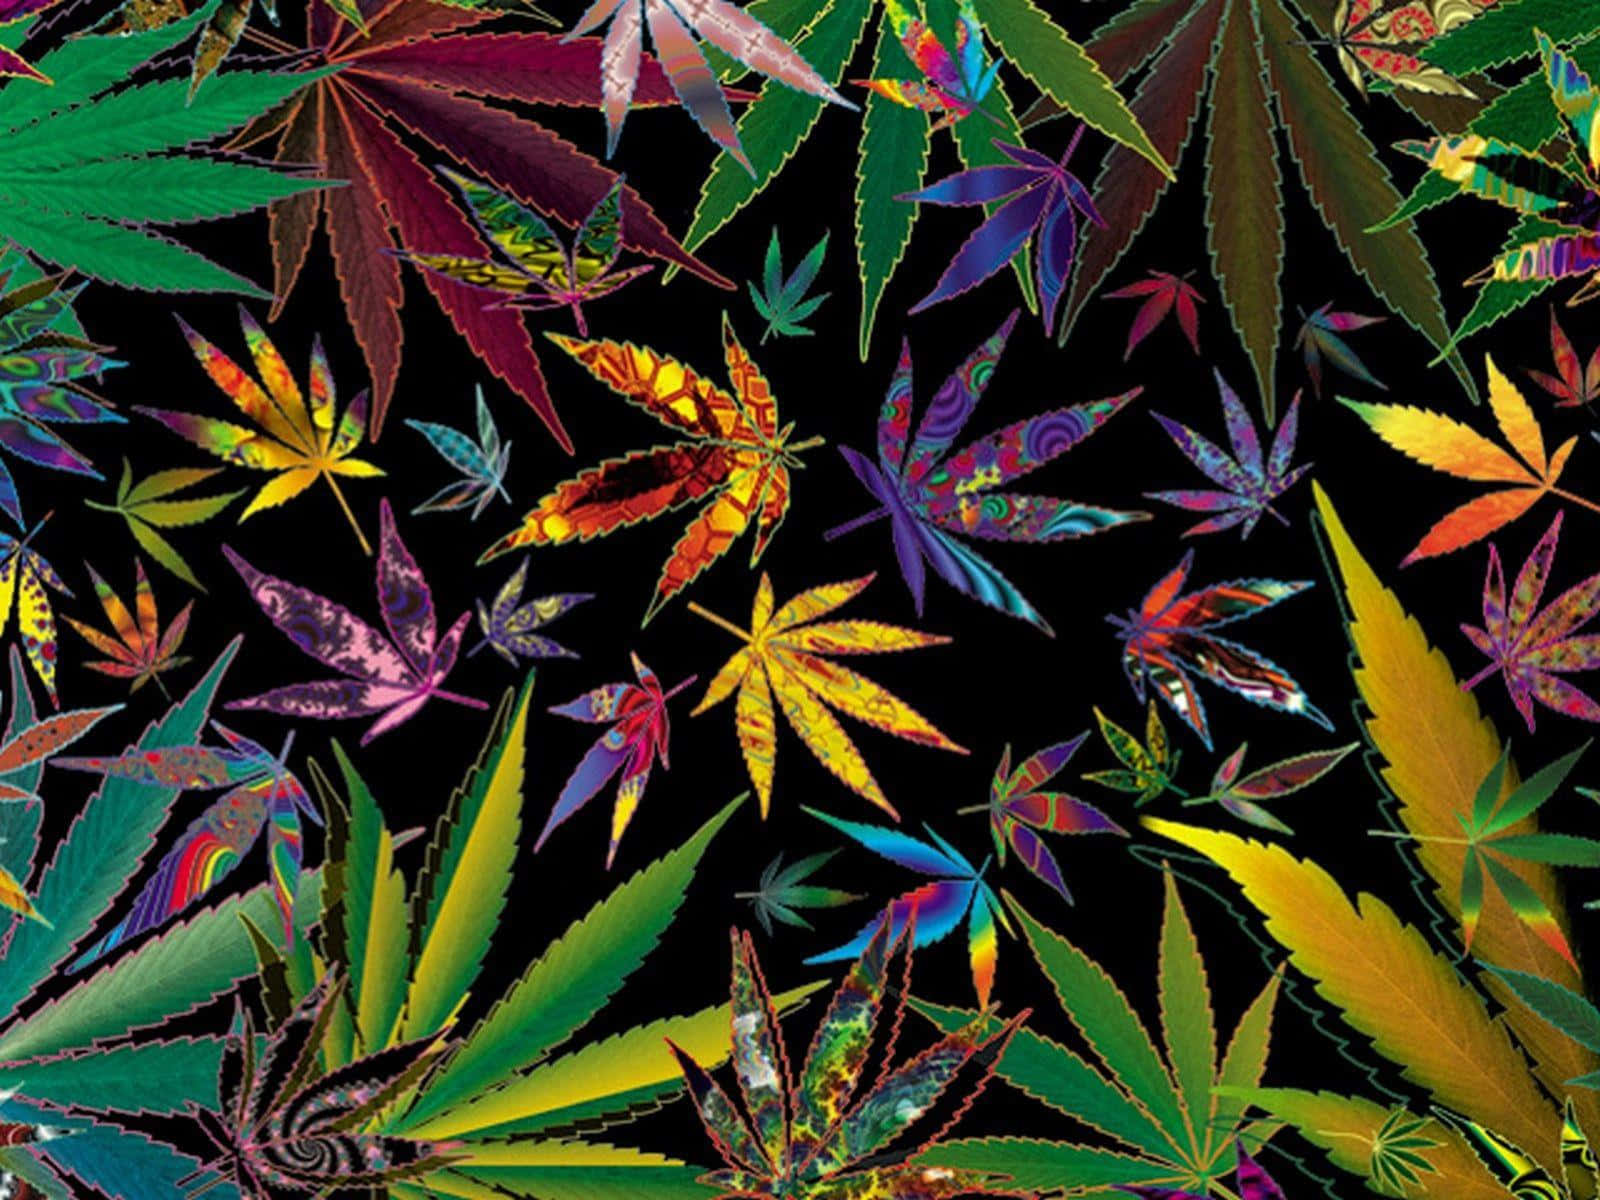 Tagen Pause Og Nyd Lykken Ved Cannabis.